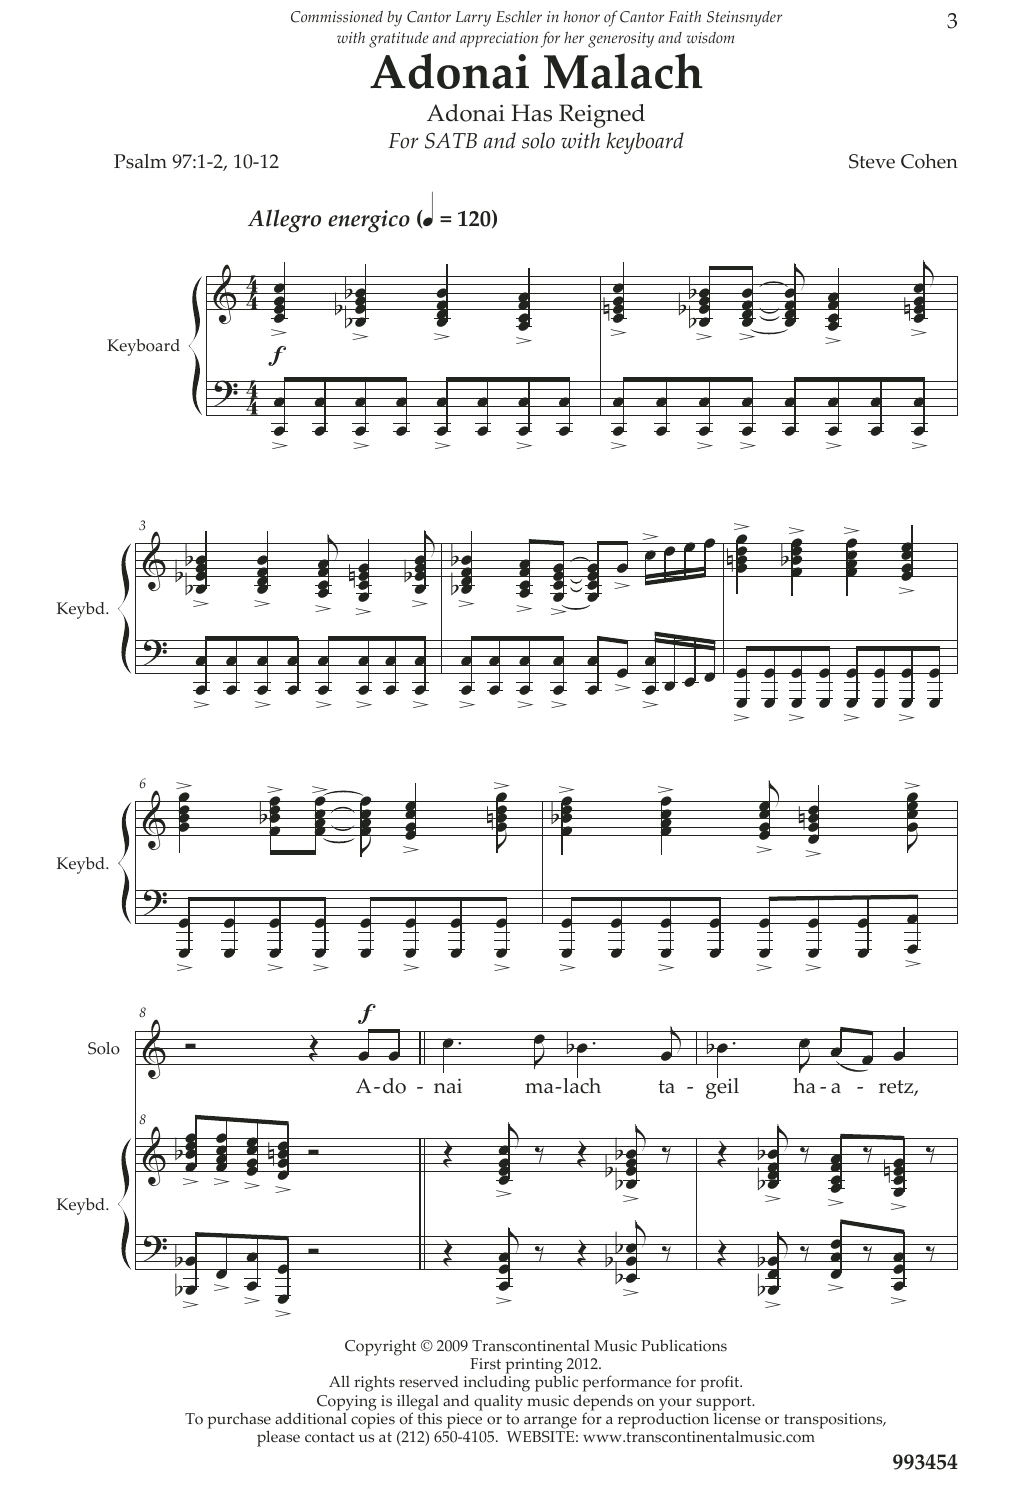 Steve Cohen Adonai Malach Satb, Solo, Keyboard Sacred Chroal Sheet Music Notes & Chords for SATB Choir - Download or Print PDF